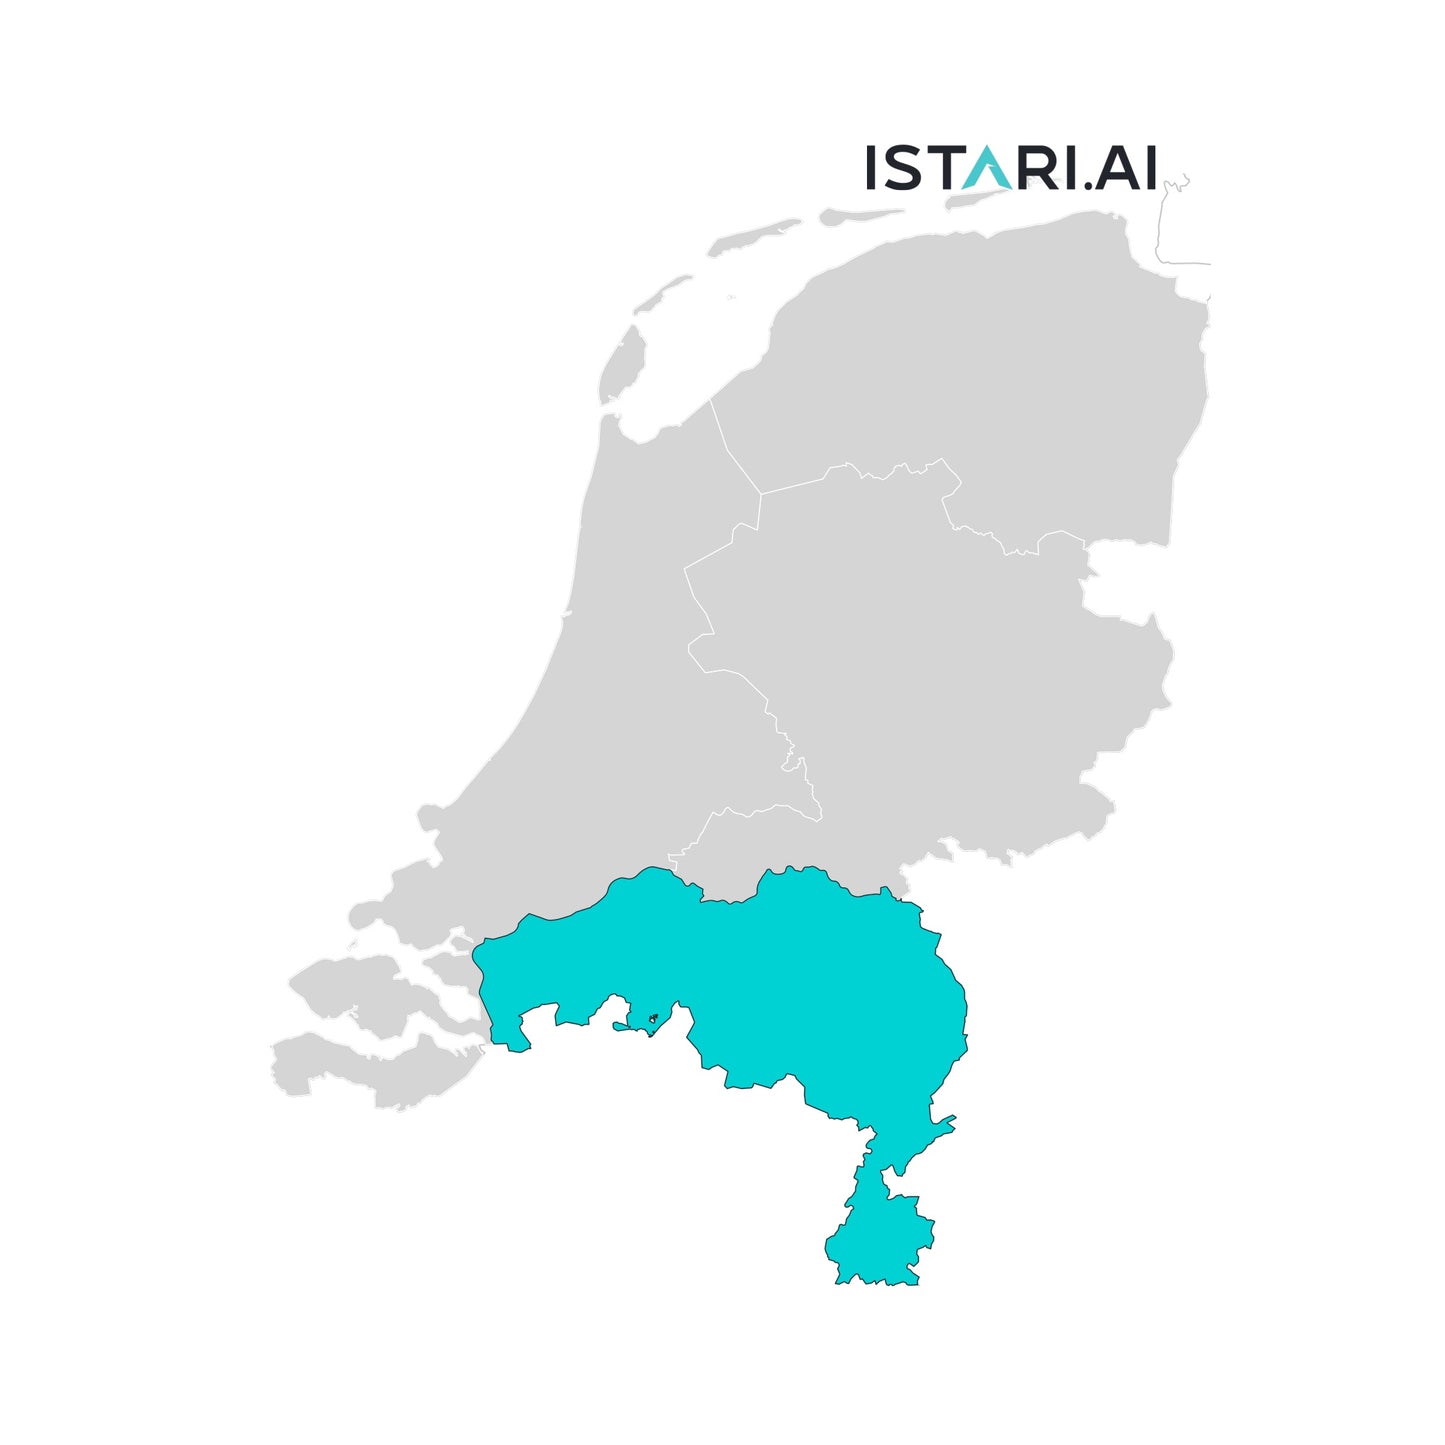 Digital Health Company List Zuid-Nederland Netherlands